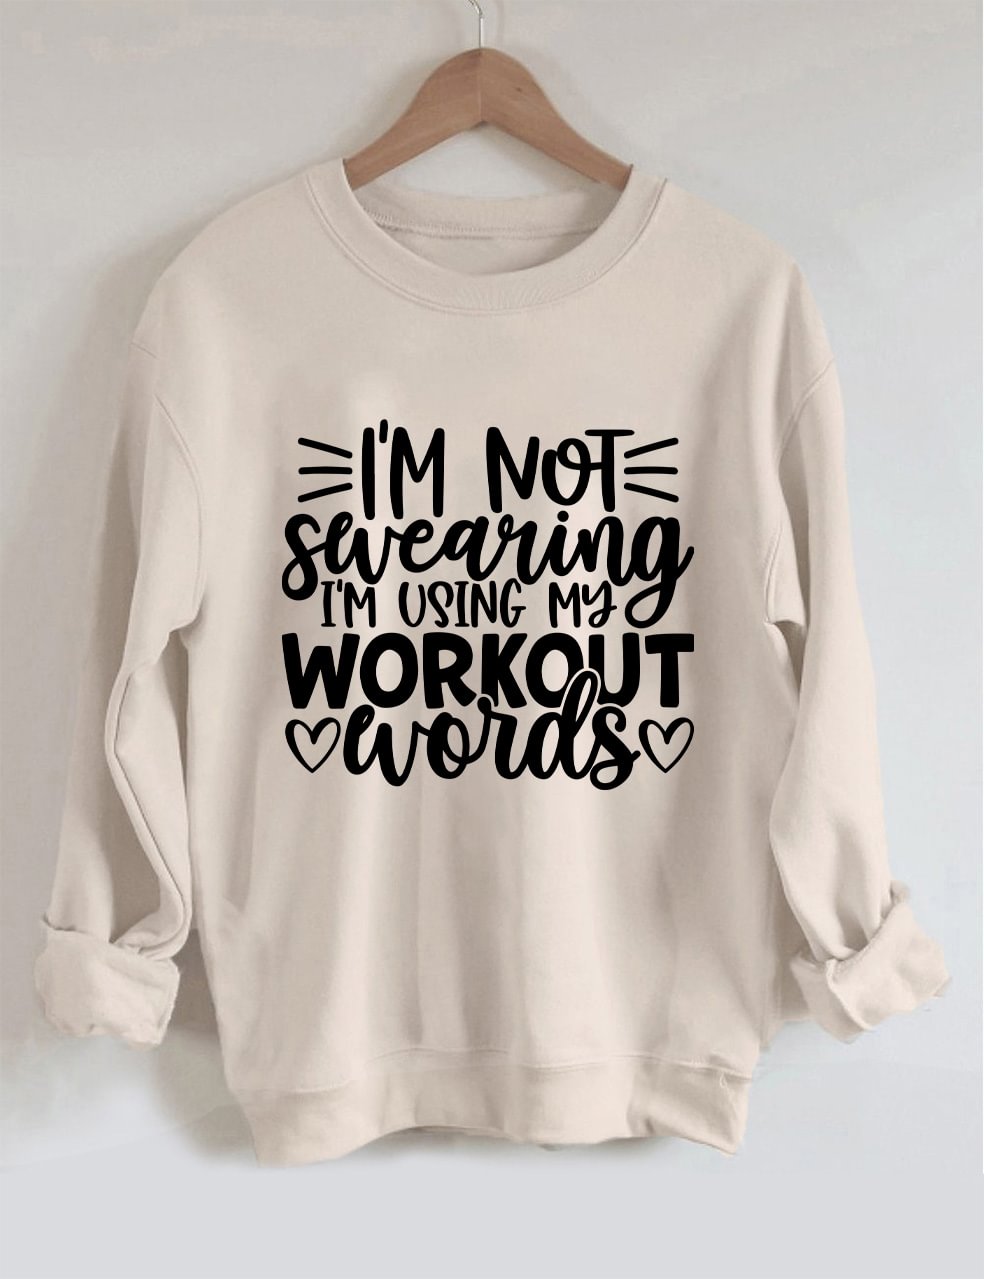 I'm Not Swearing I'm Using Workout Words Sweatshirt